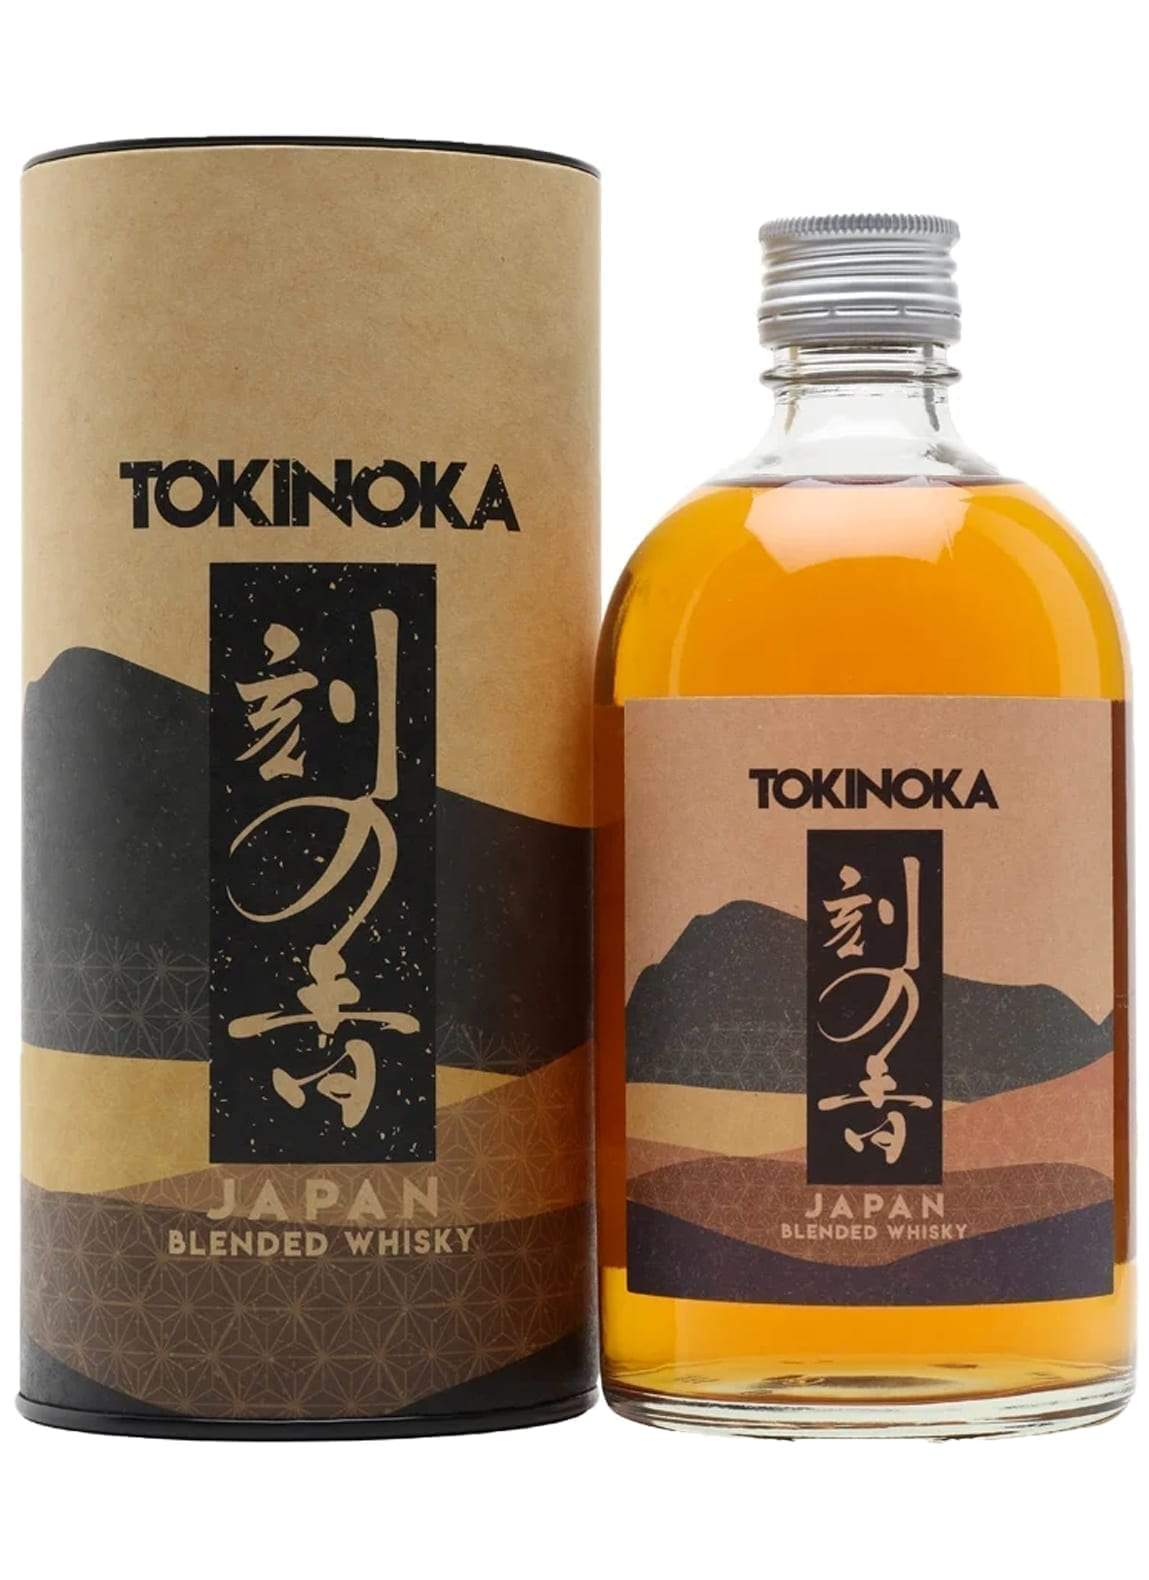 Tokinoka Blended Japanese Whisky 40% 500ml | Whiskey | Shop online at Spirits of France